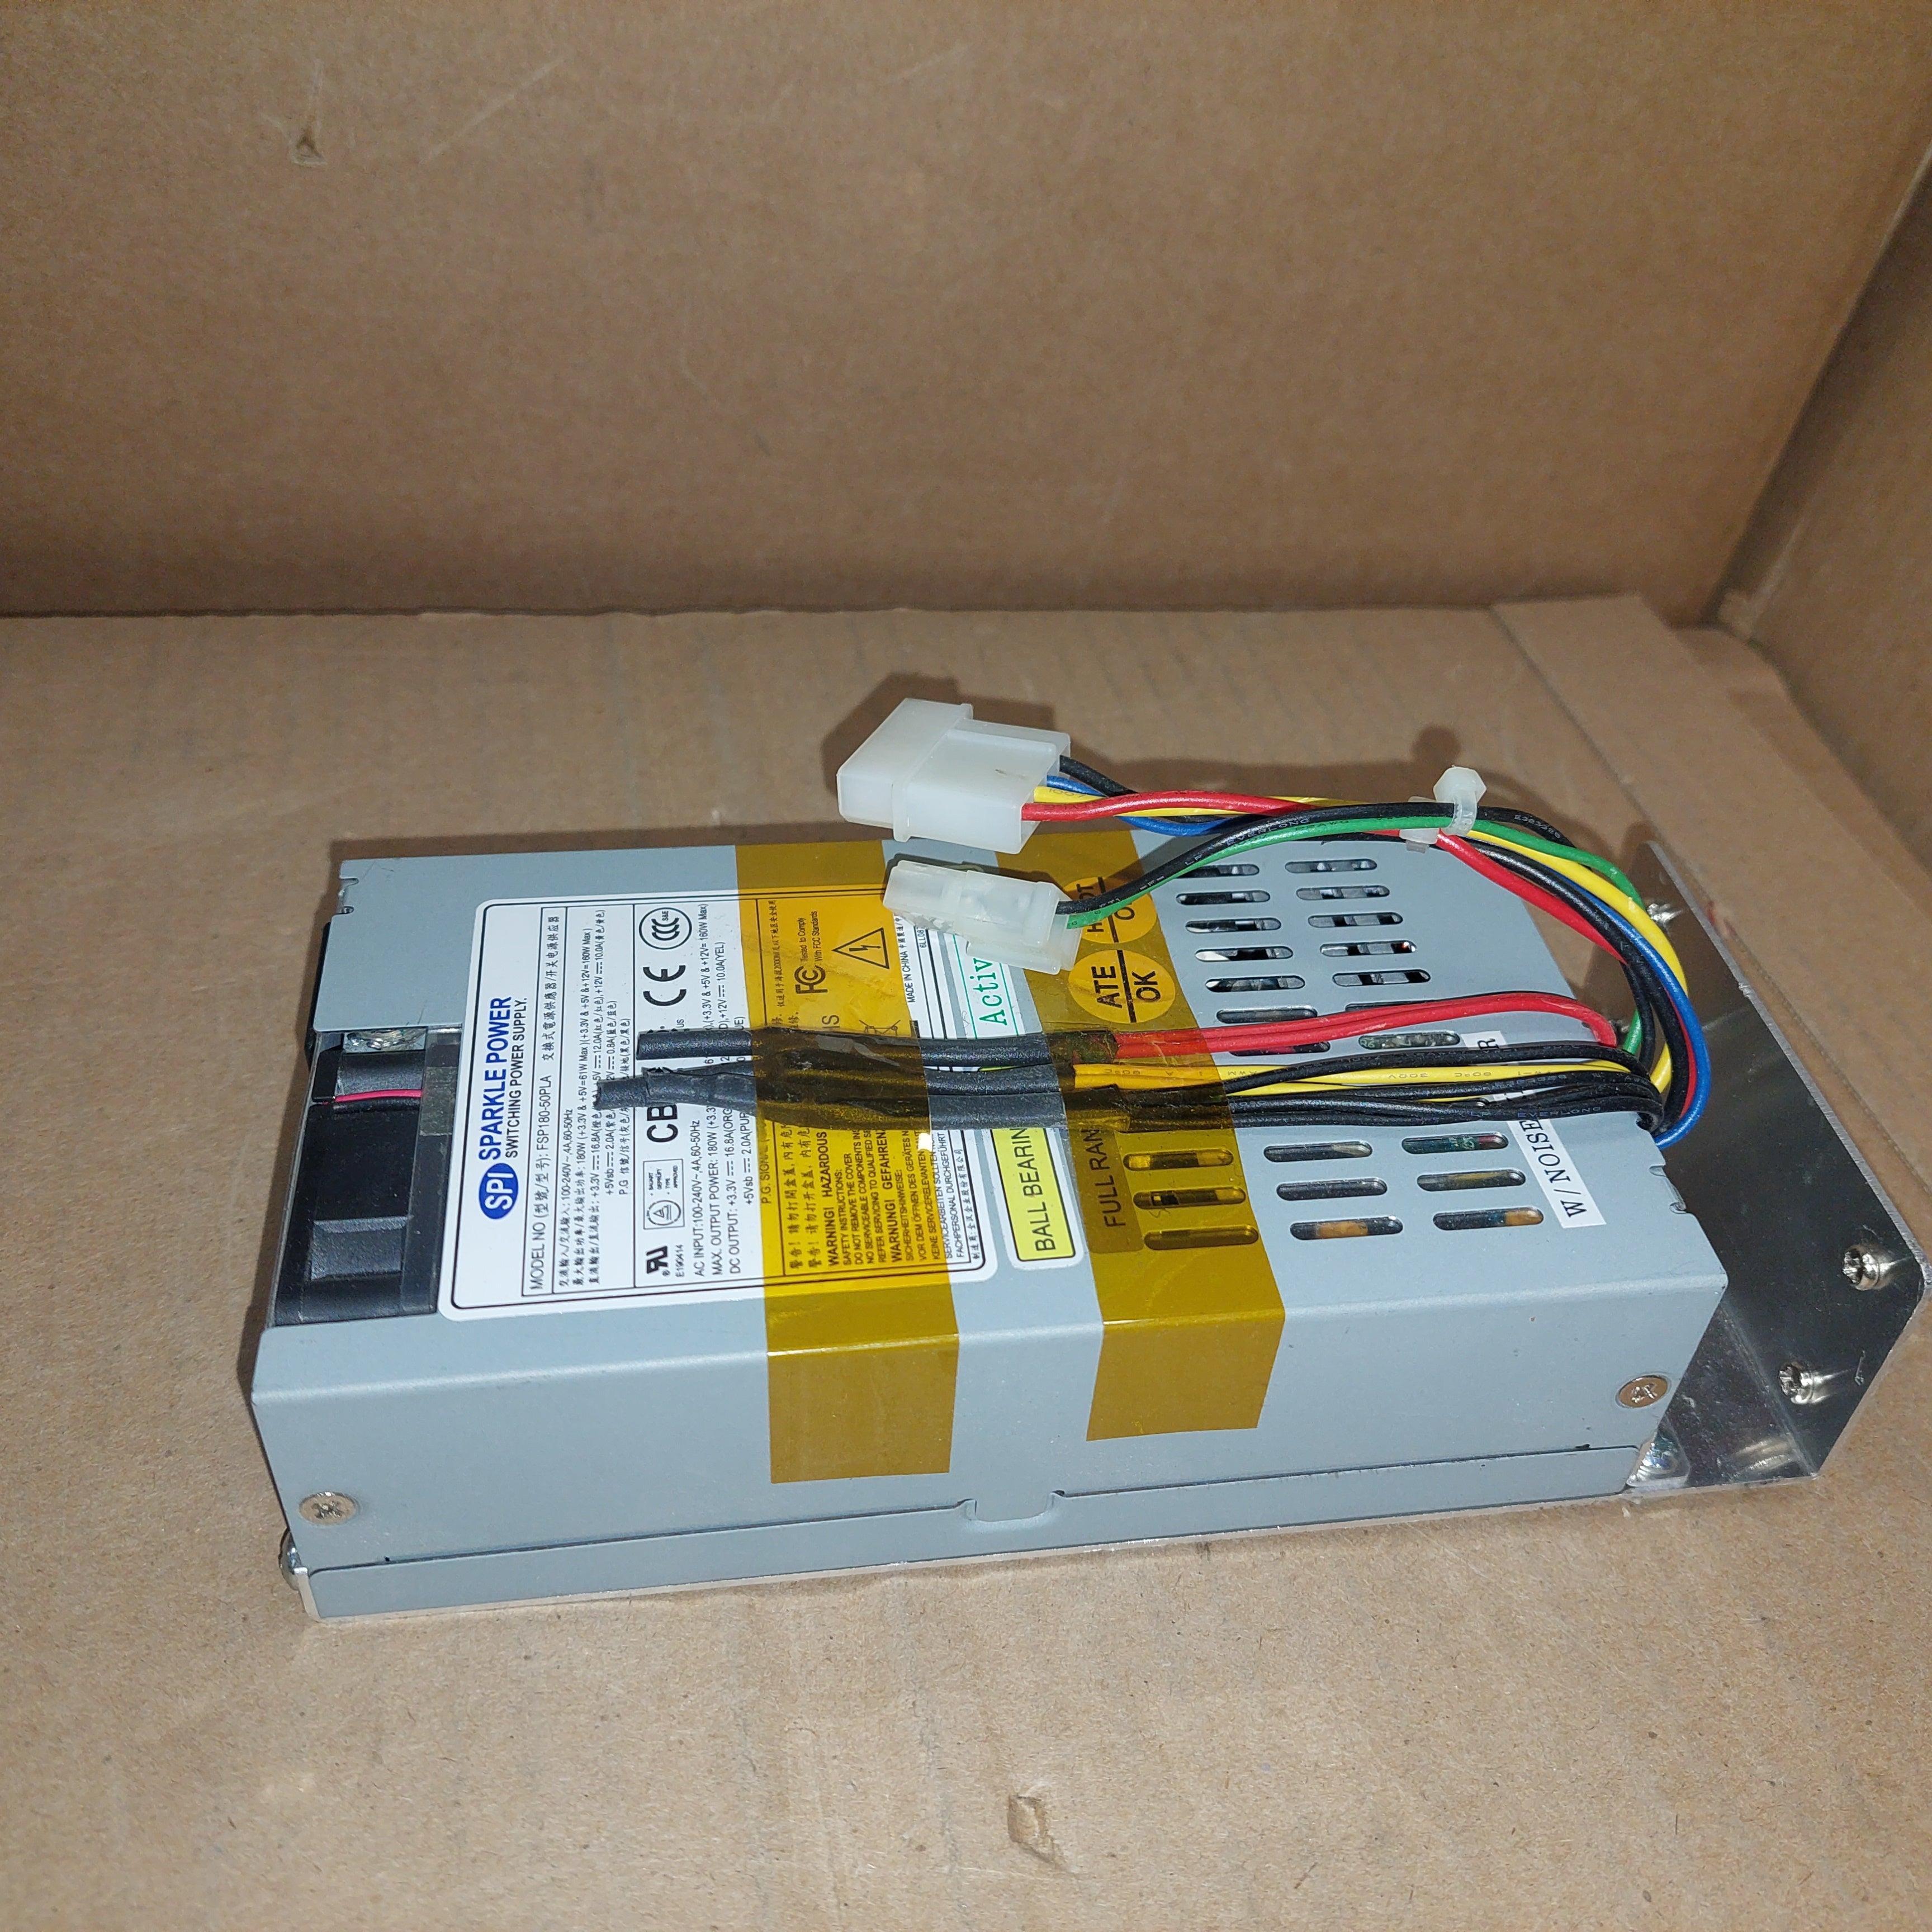 SPI Sparkle FSP180PLA-KBL2, FSP180-50PLA Switching Power Supply 180W Used